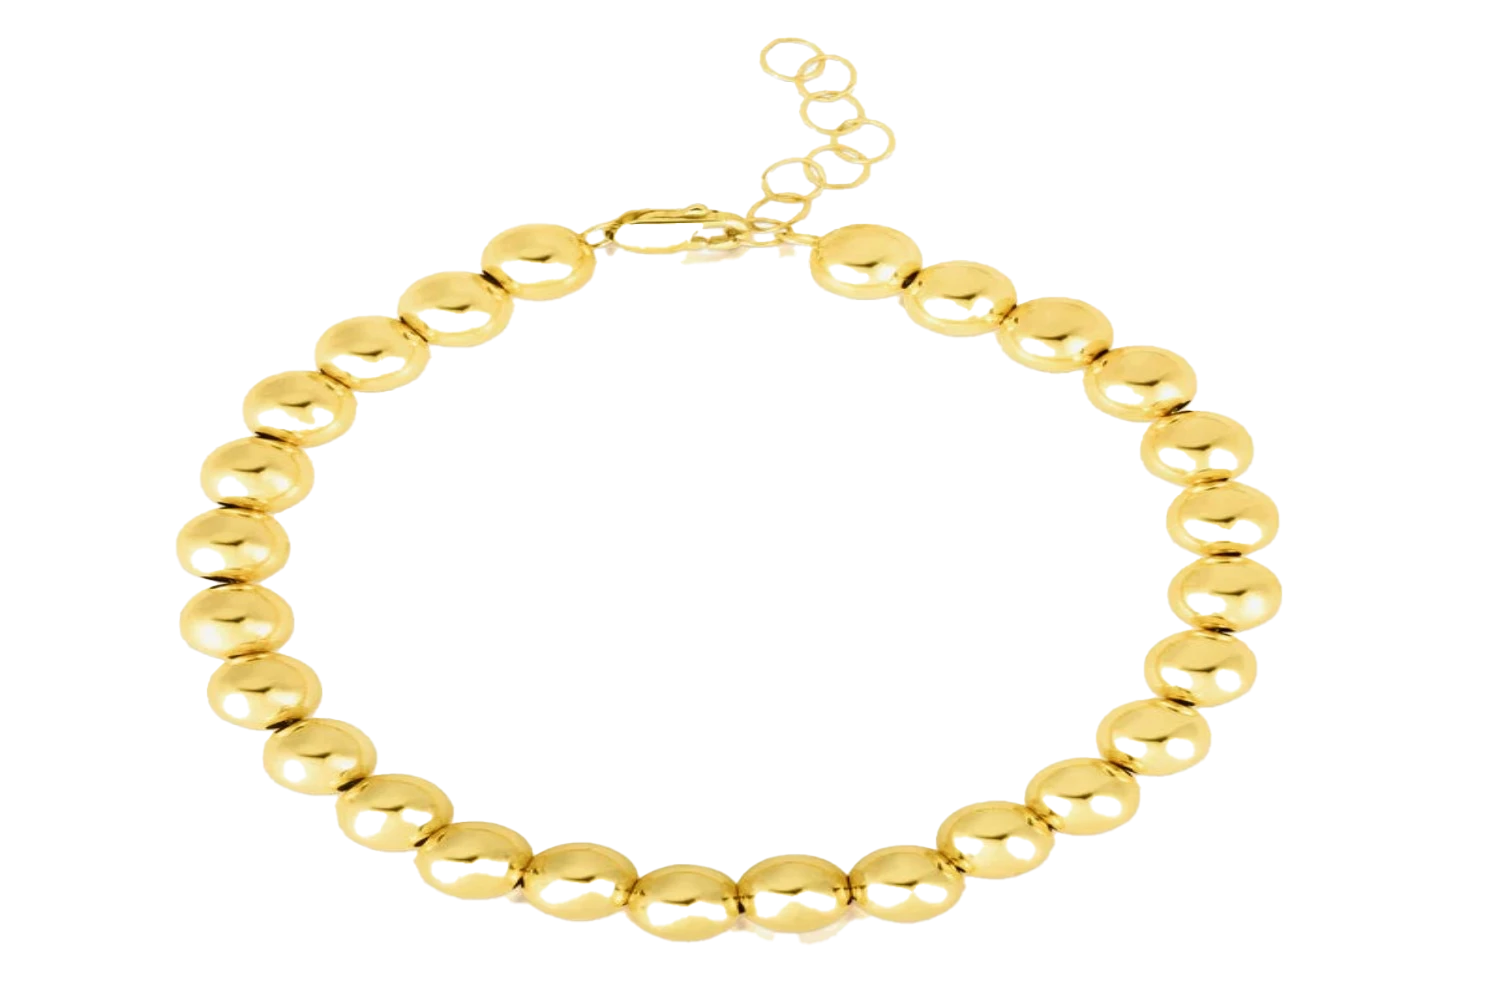 Heart Bracelet Romantic Lovers' Jewelry Platinum/18K Gold Plated Carving  Wristband 10MM 20 CM Chain Bracele | Wish | Trendy bracelets, Pretty  jewellery, Cute jewelry